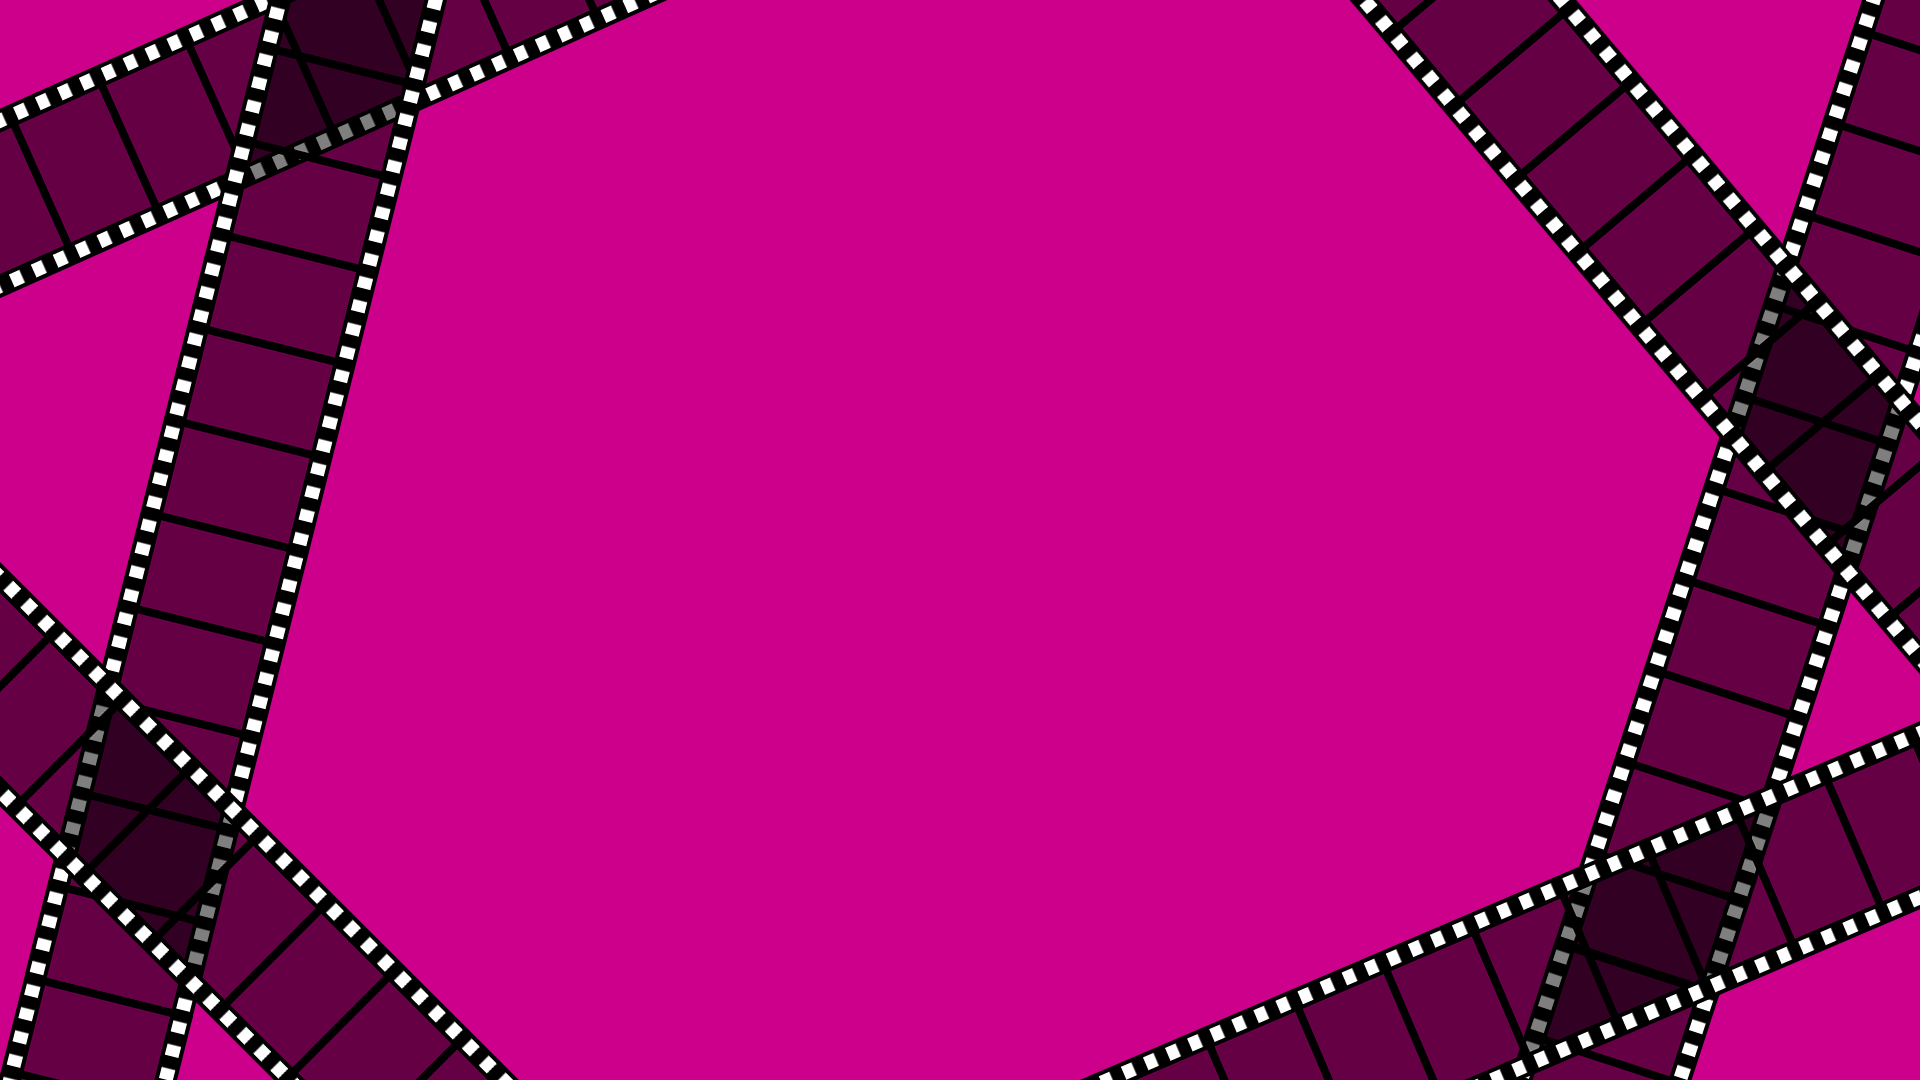 Black and Pink Desktop Wallpaper